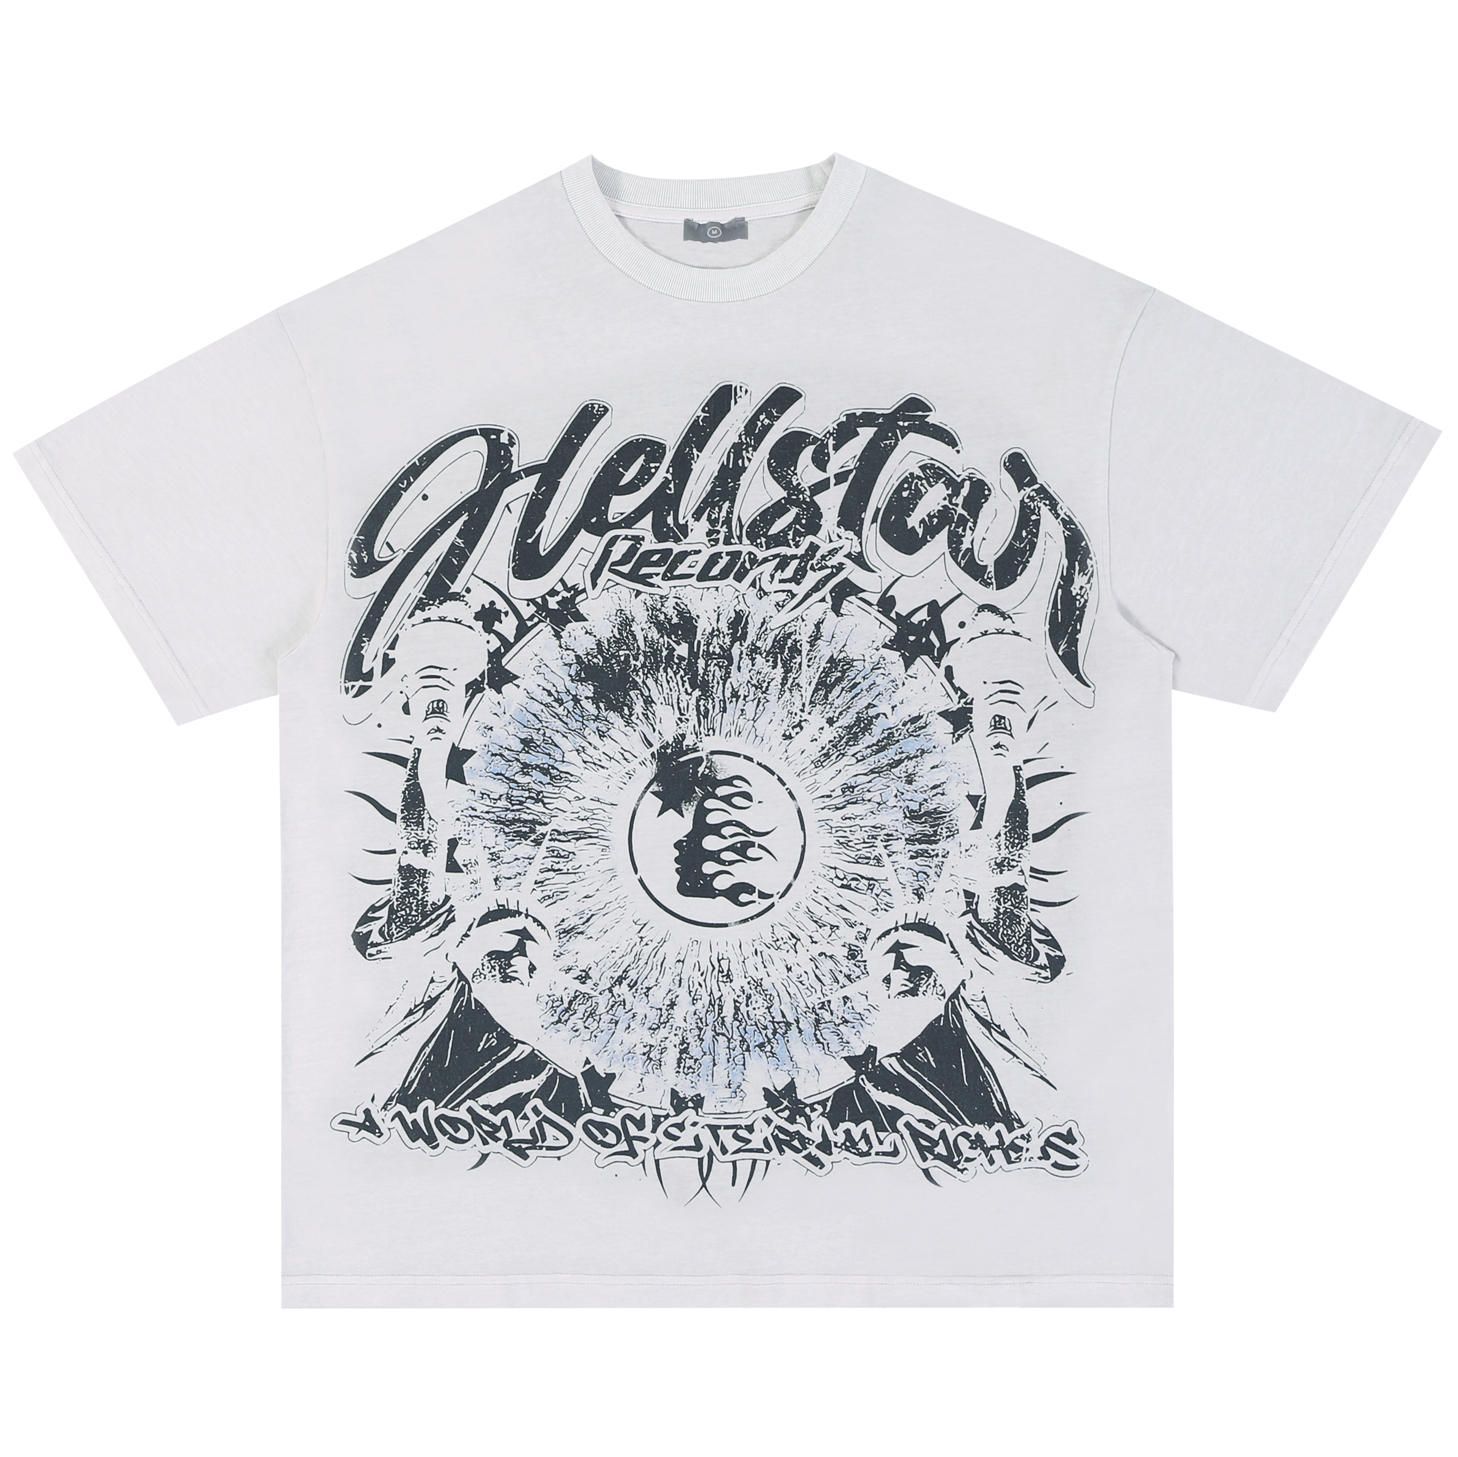 Hellstar-shirt-1